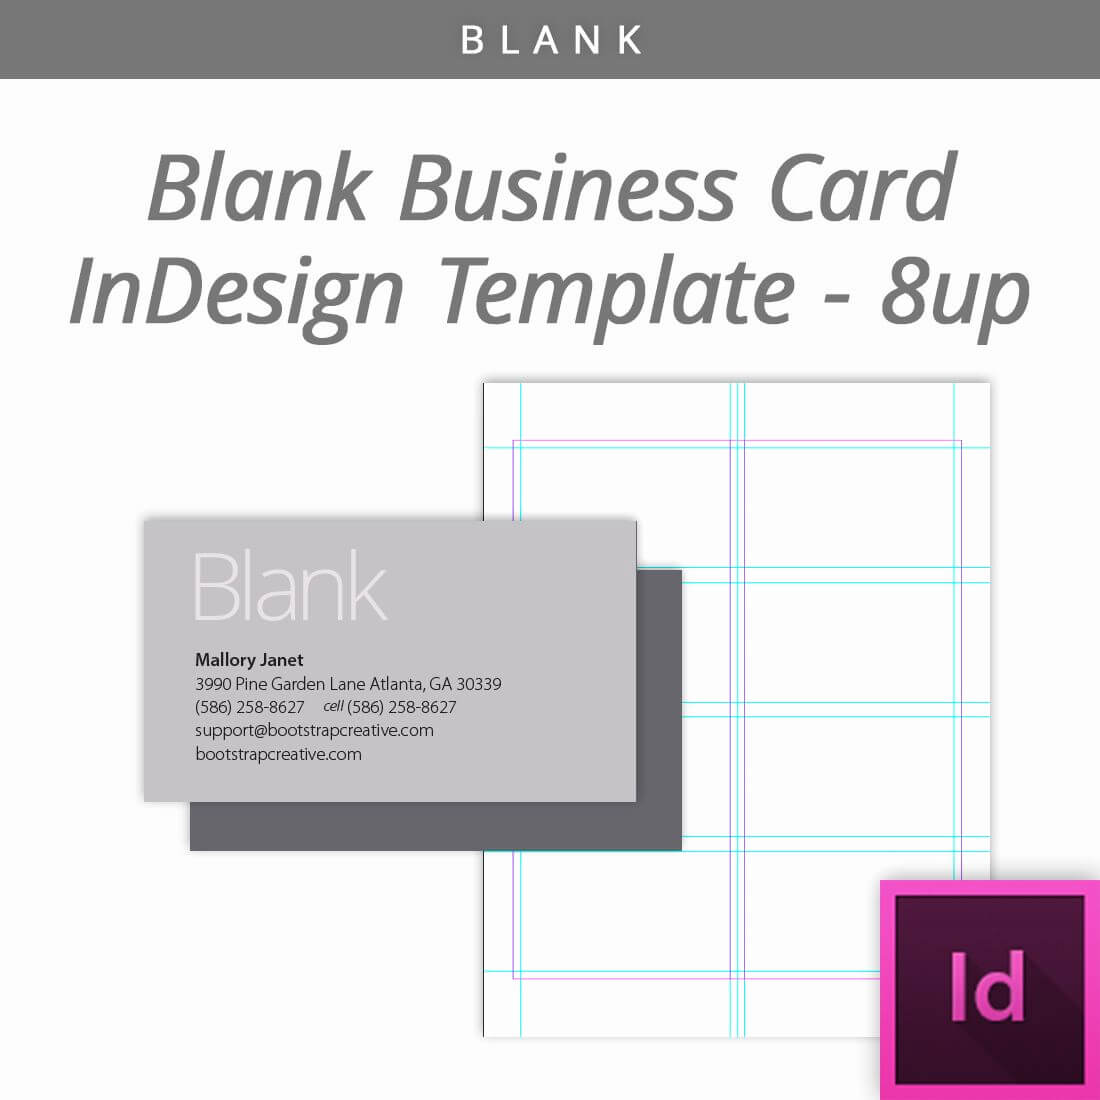 Fdb30 Blank Business Card Template – Cvaanmeldservice.nl Throughout Blank Business Card Template Download